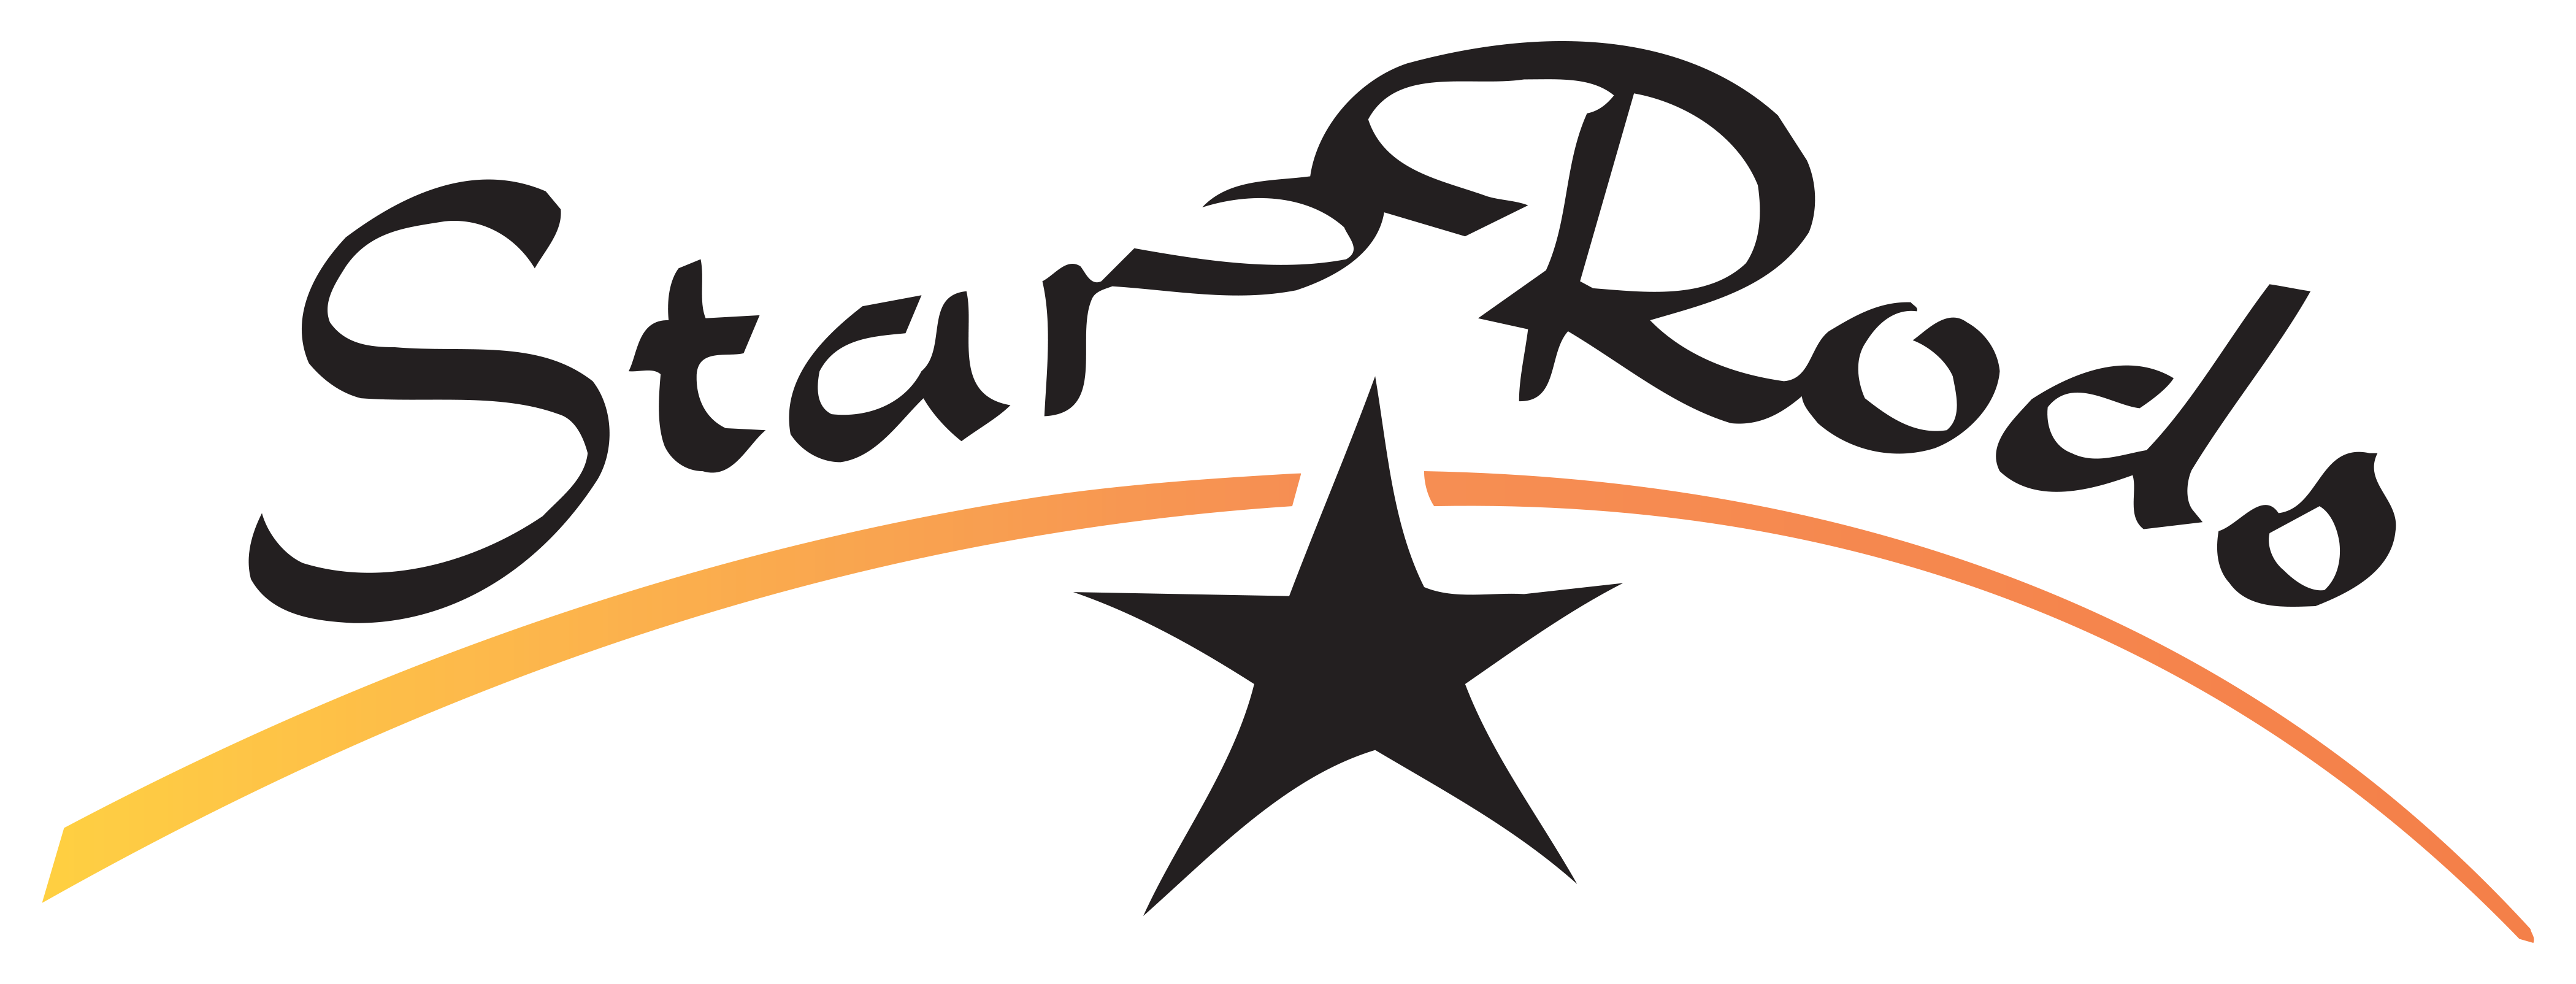 https://ccanc.org/wp-content/uploads/2020/01/Star-Rods-Logo.png